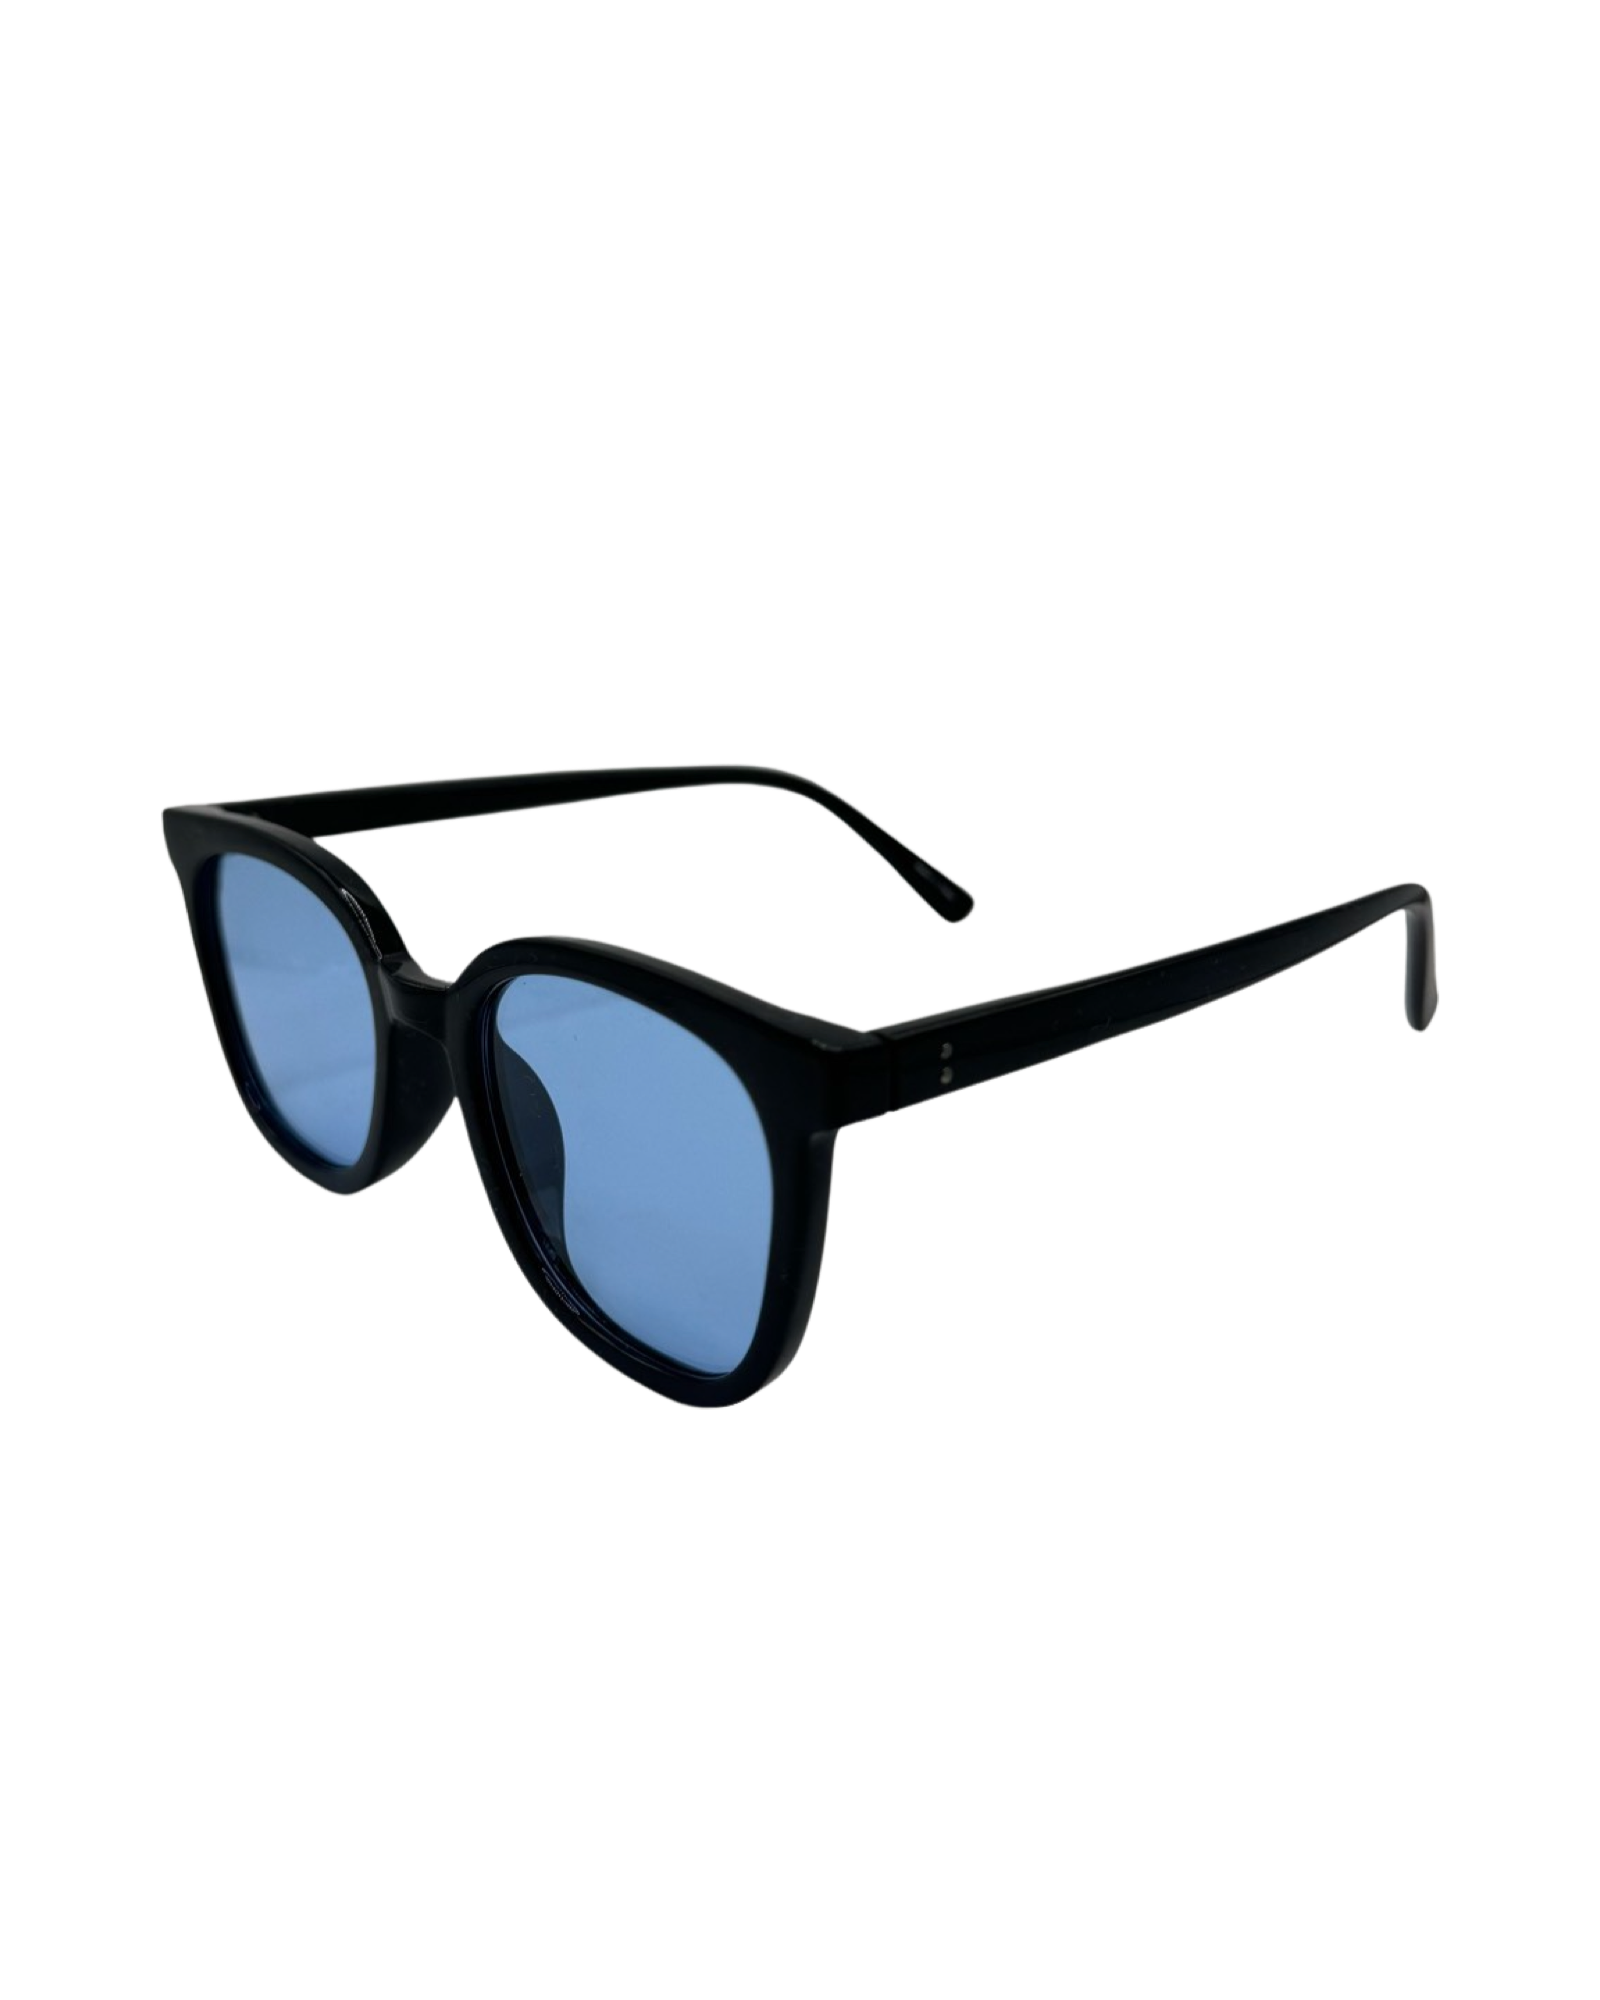 Tinted Sunglasses - Blue